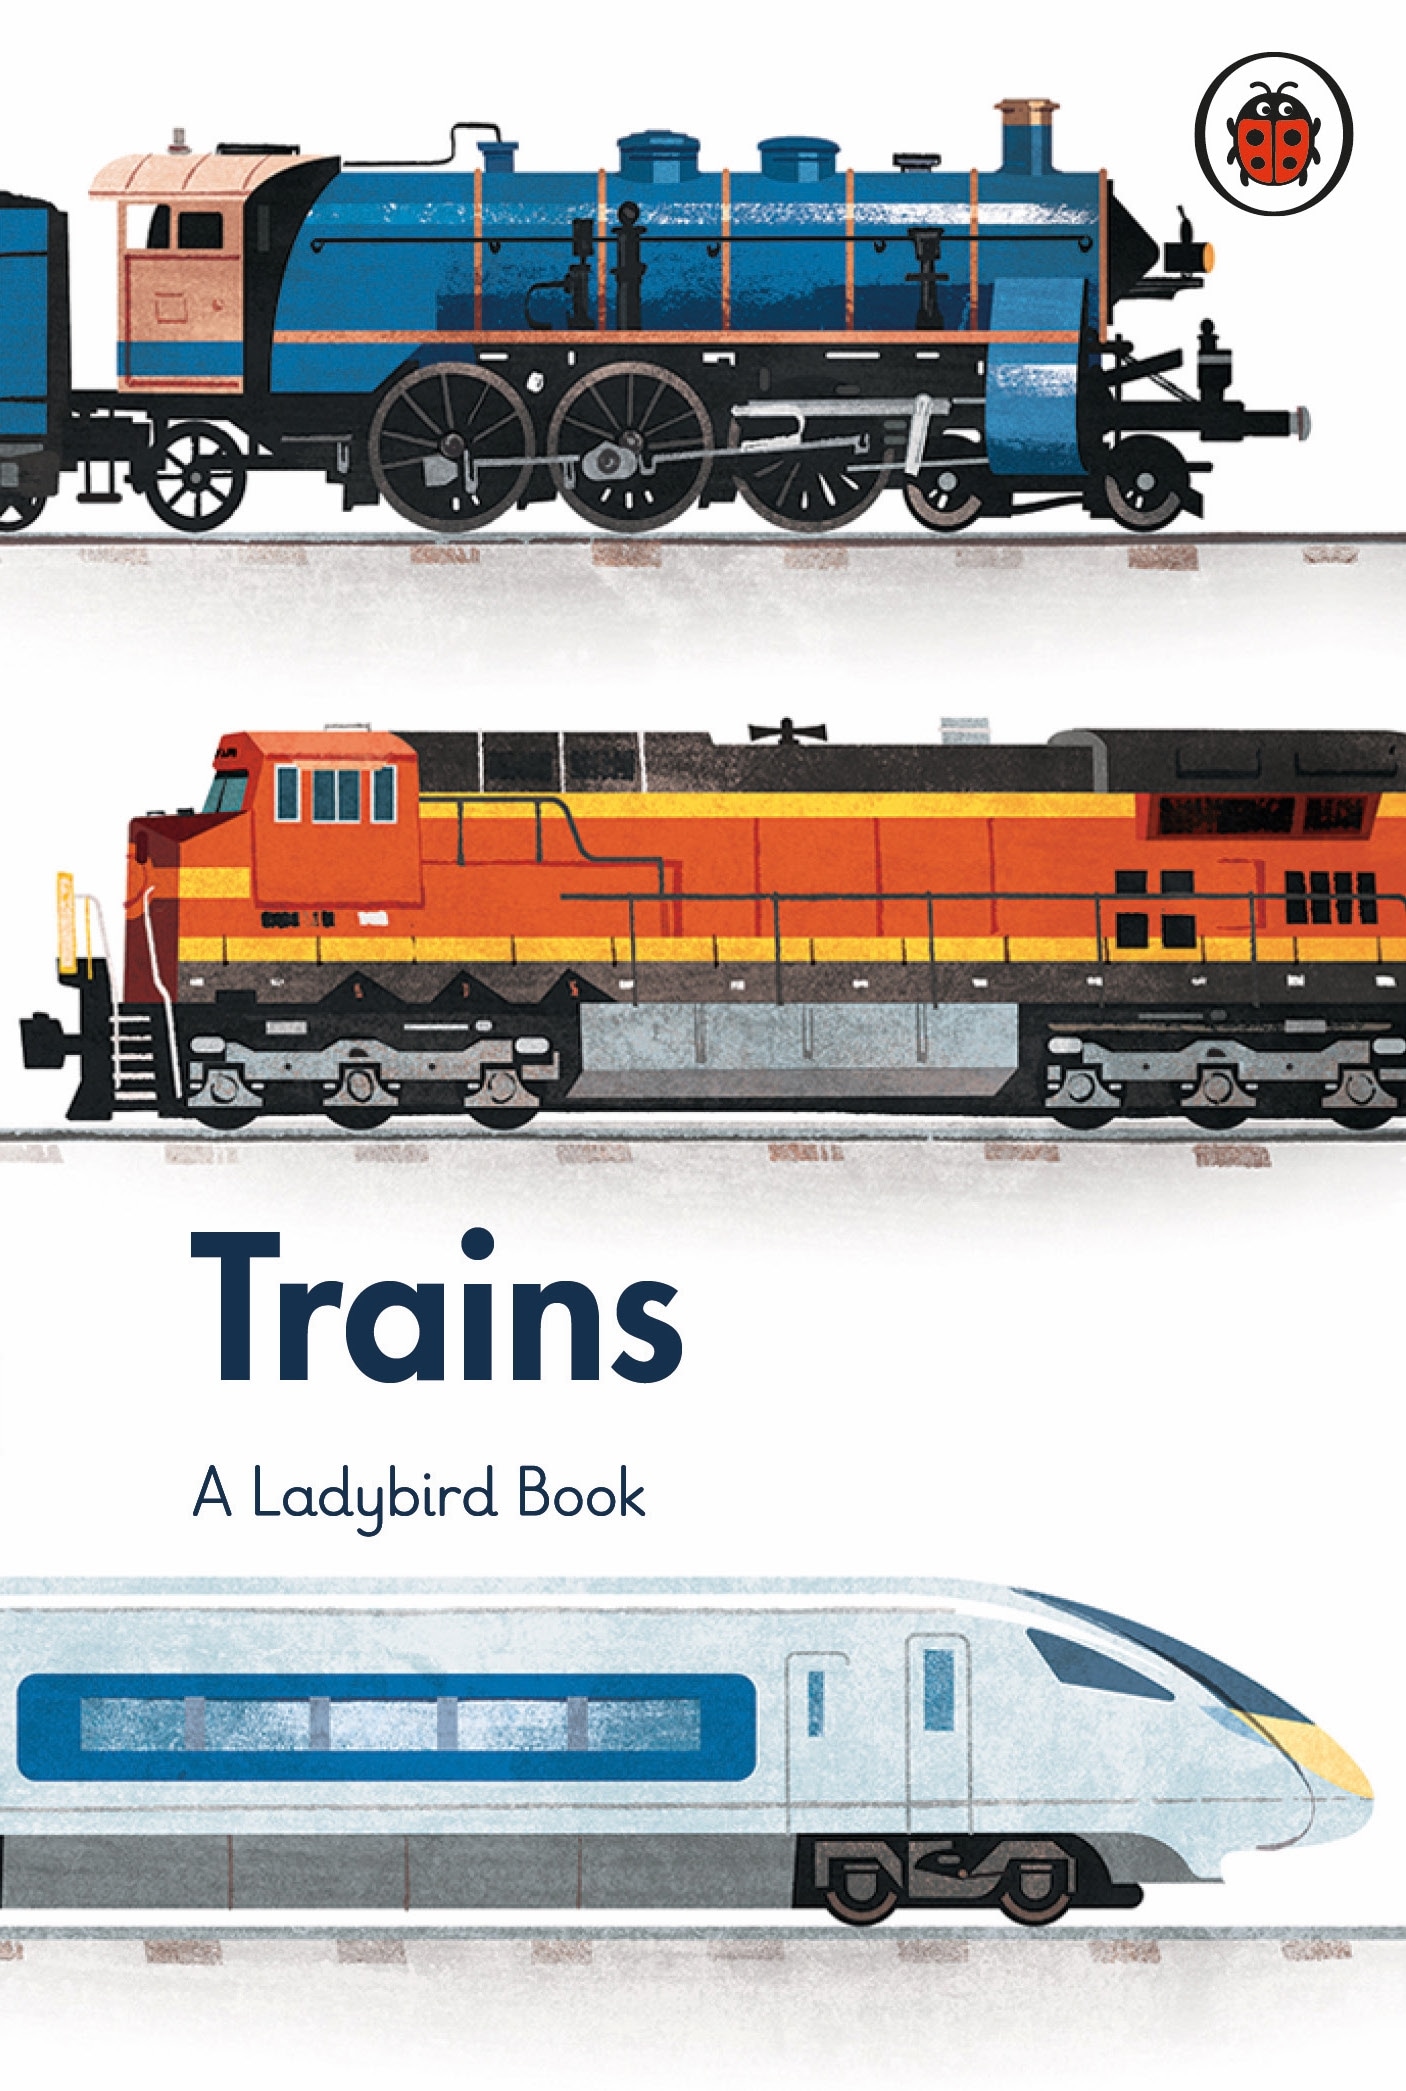 Book “A Ladybird Book: Trains” by Elizabeth Jenner, Jamey Christoph — August 5, 2021